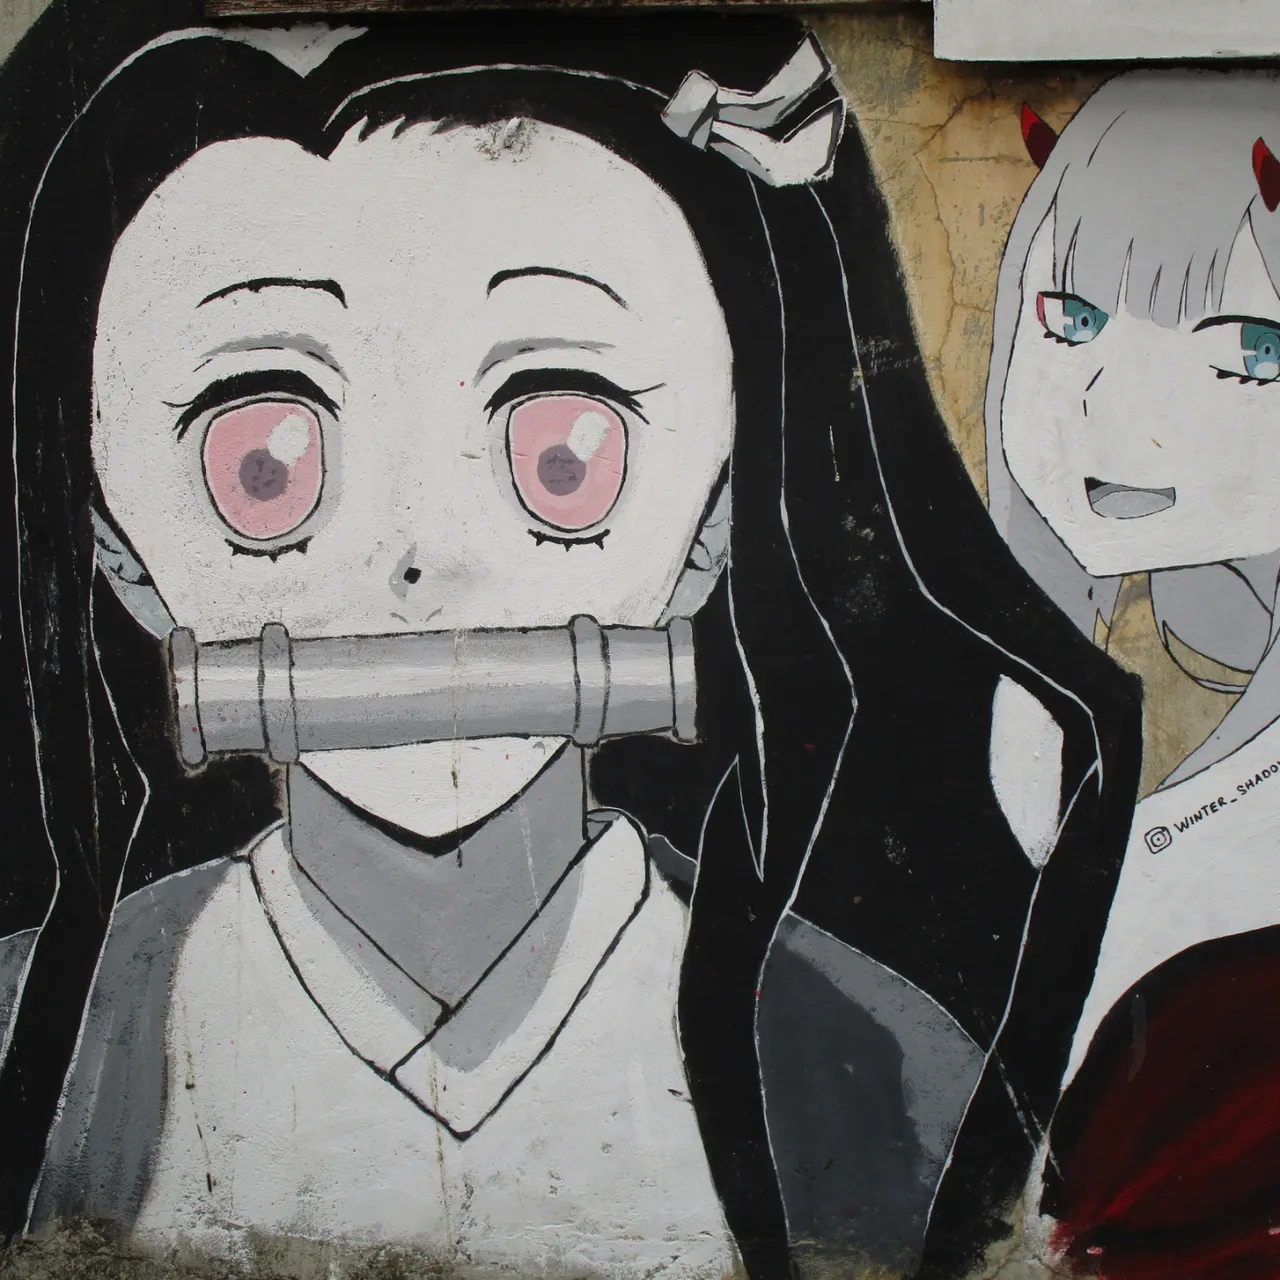 Anime Graffiti in China Town, Port Louis